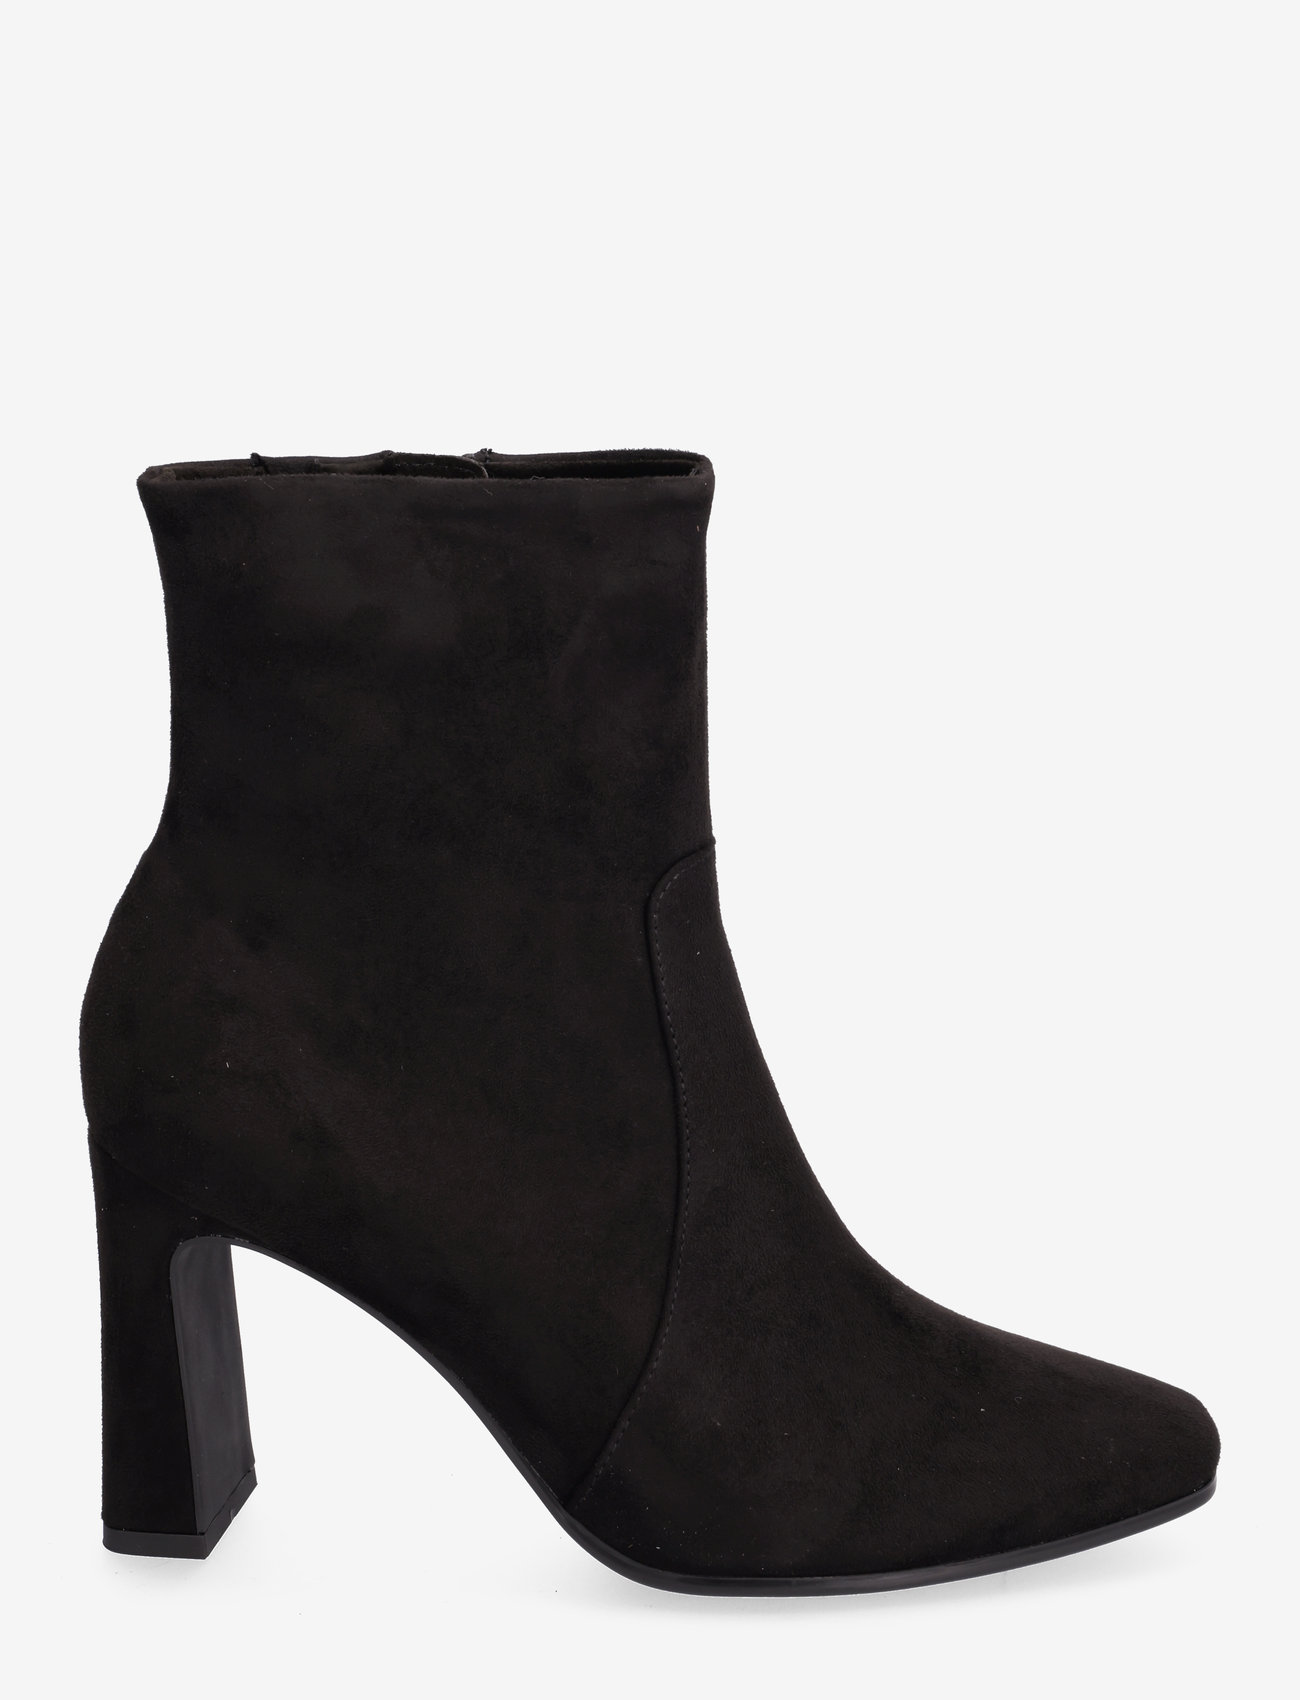 Tamaris - Women Boots - høj hæl - black - 1